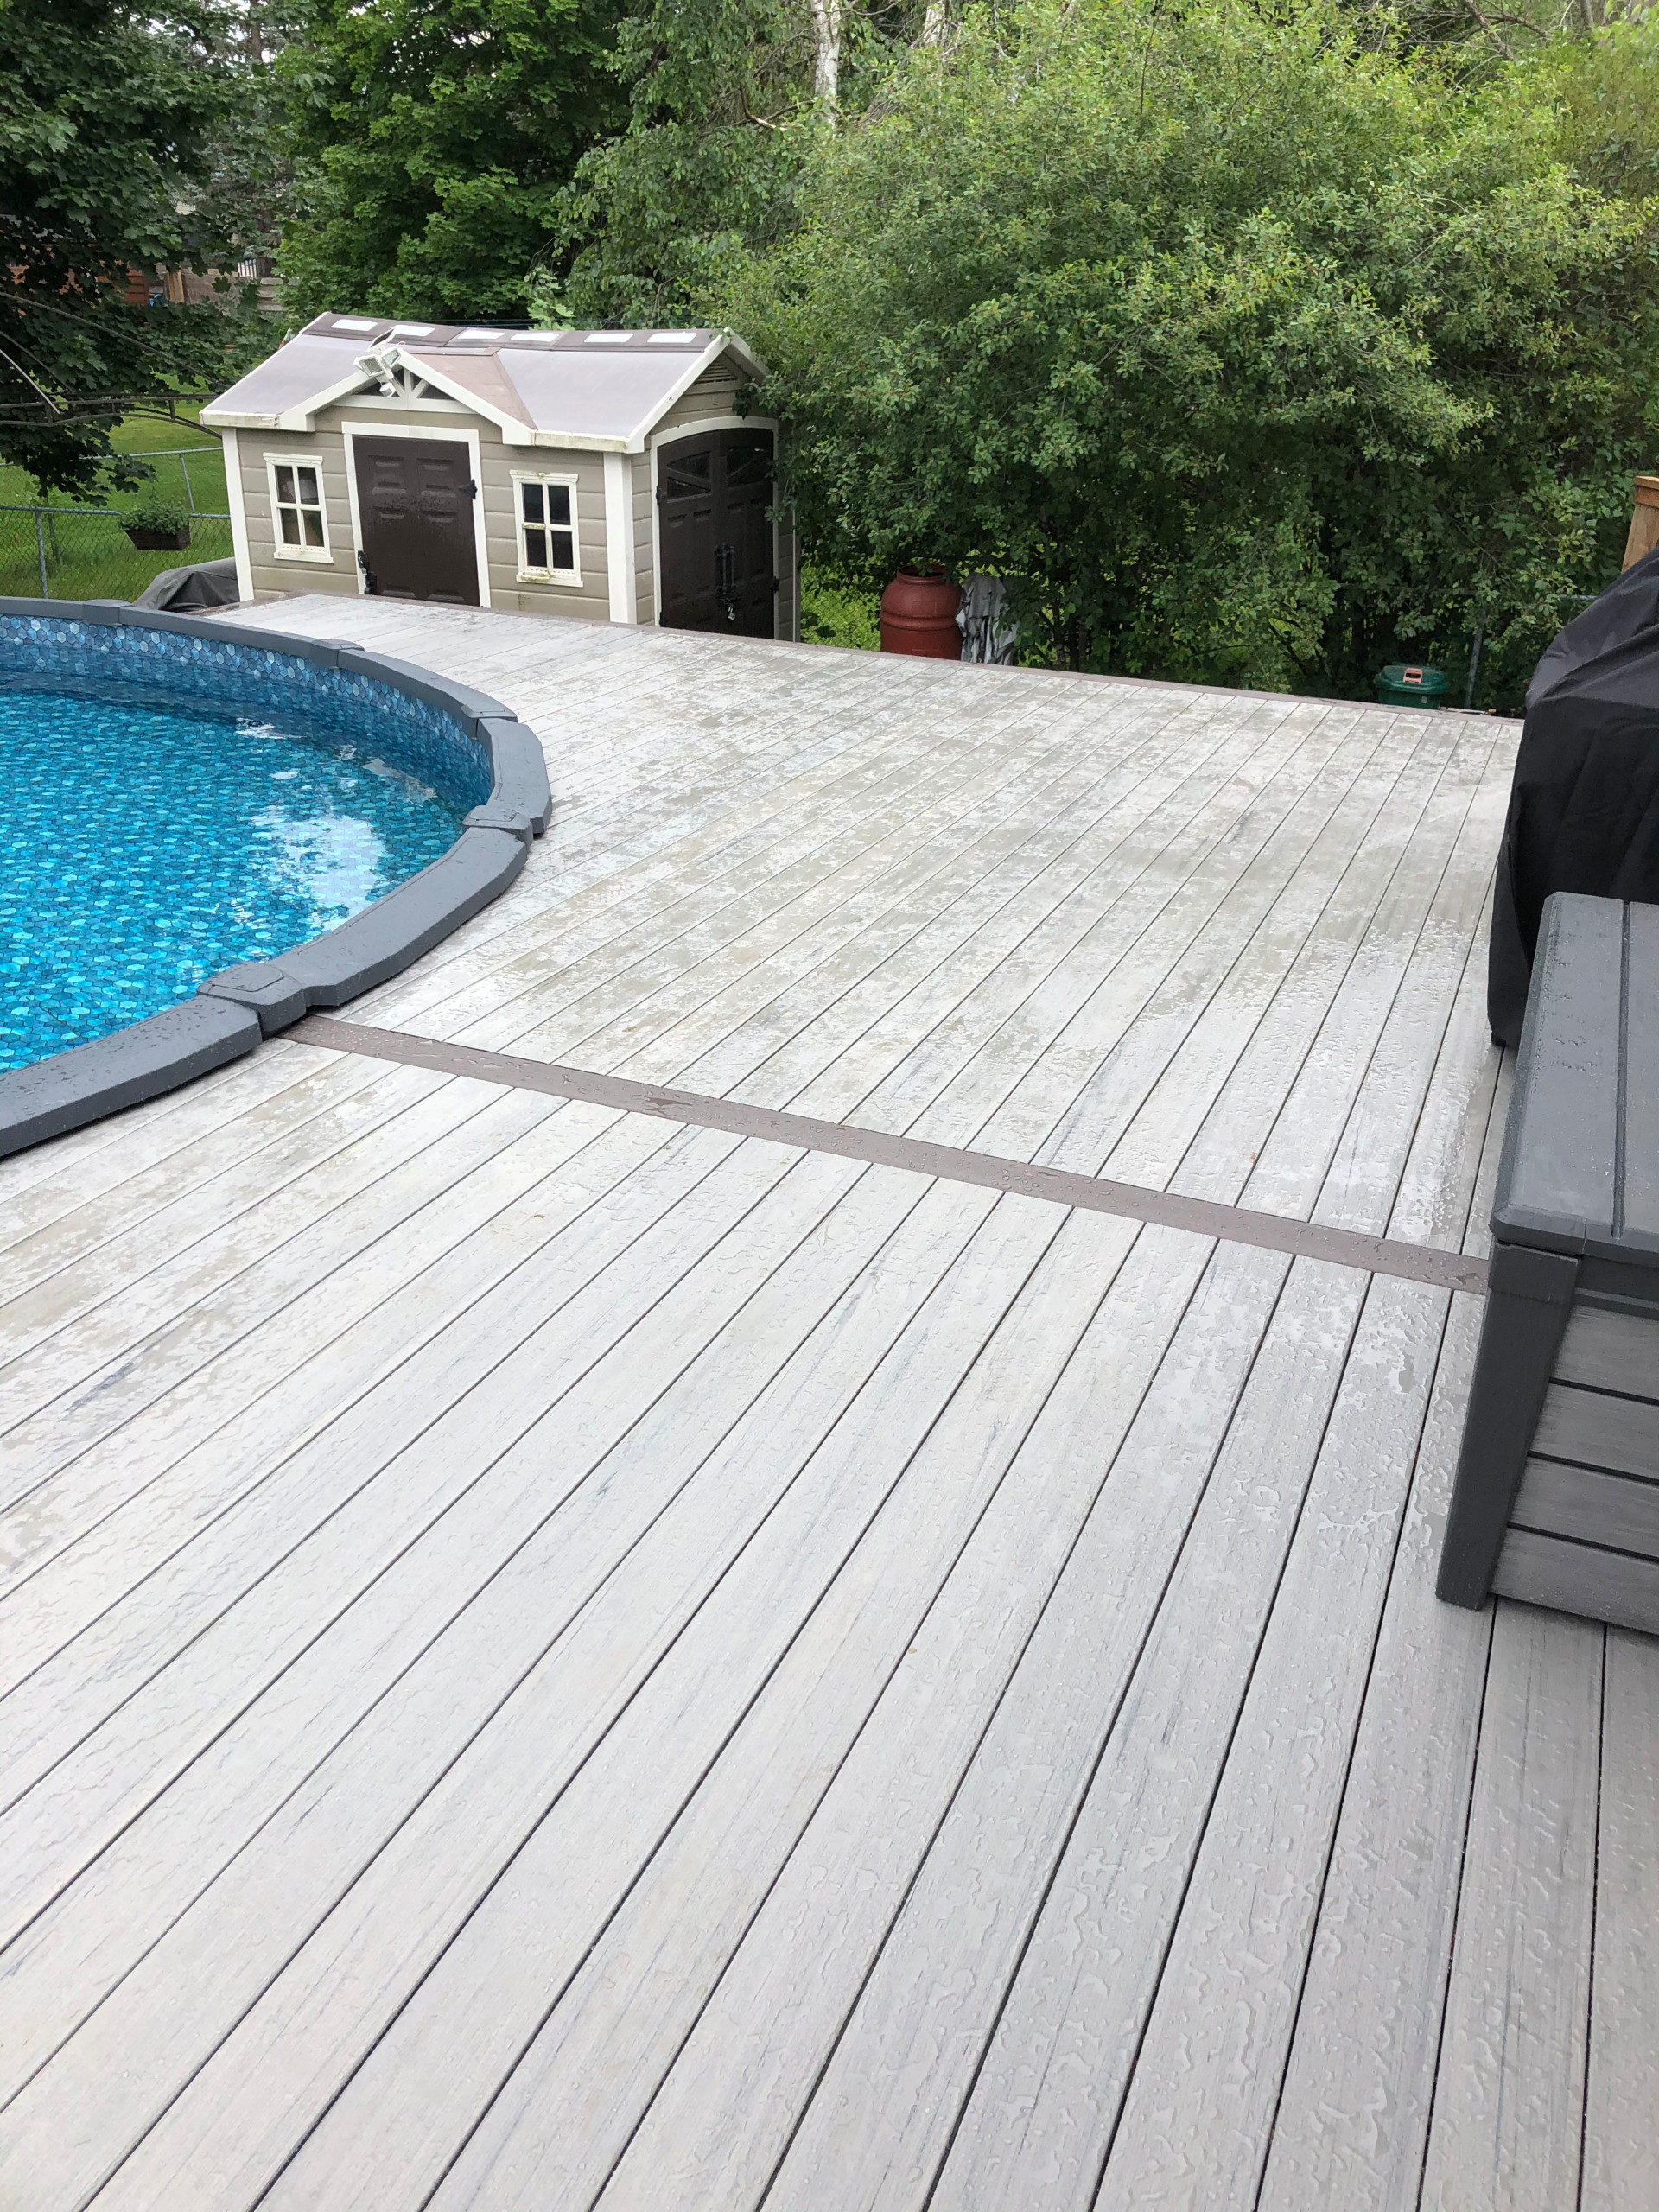 Timbertech composite deck around a pool